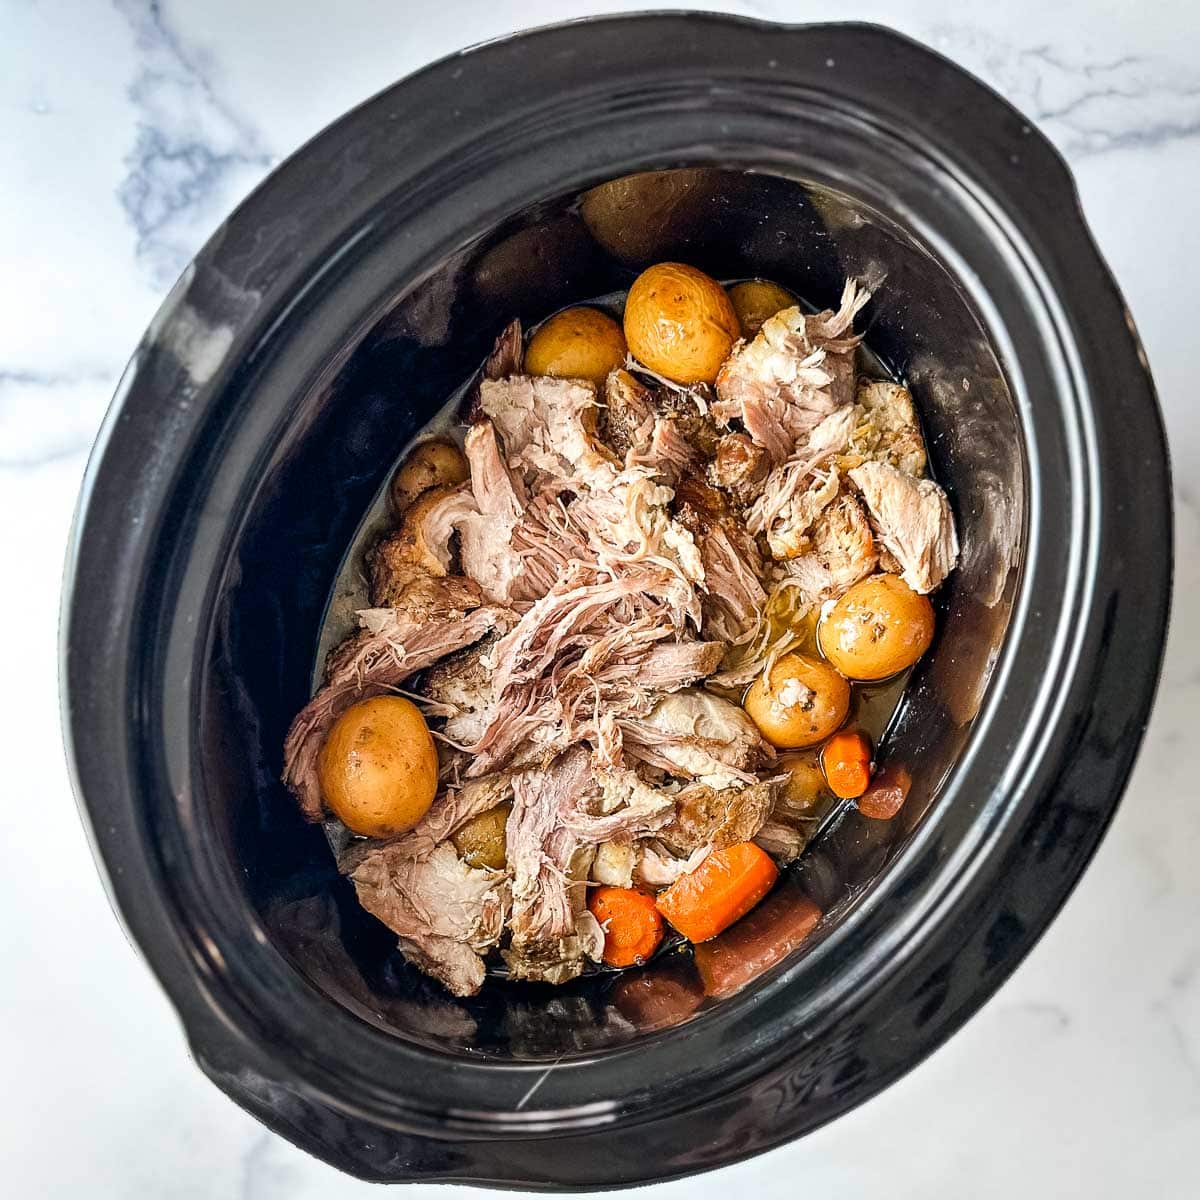 A crock pot full of shredded pork roast, potatoes and carrots.